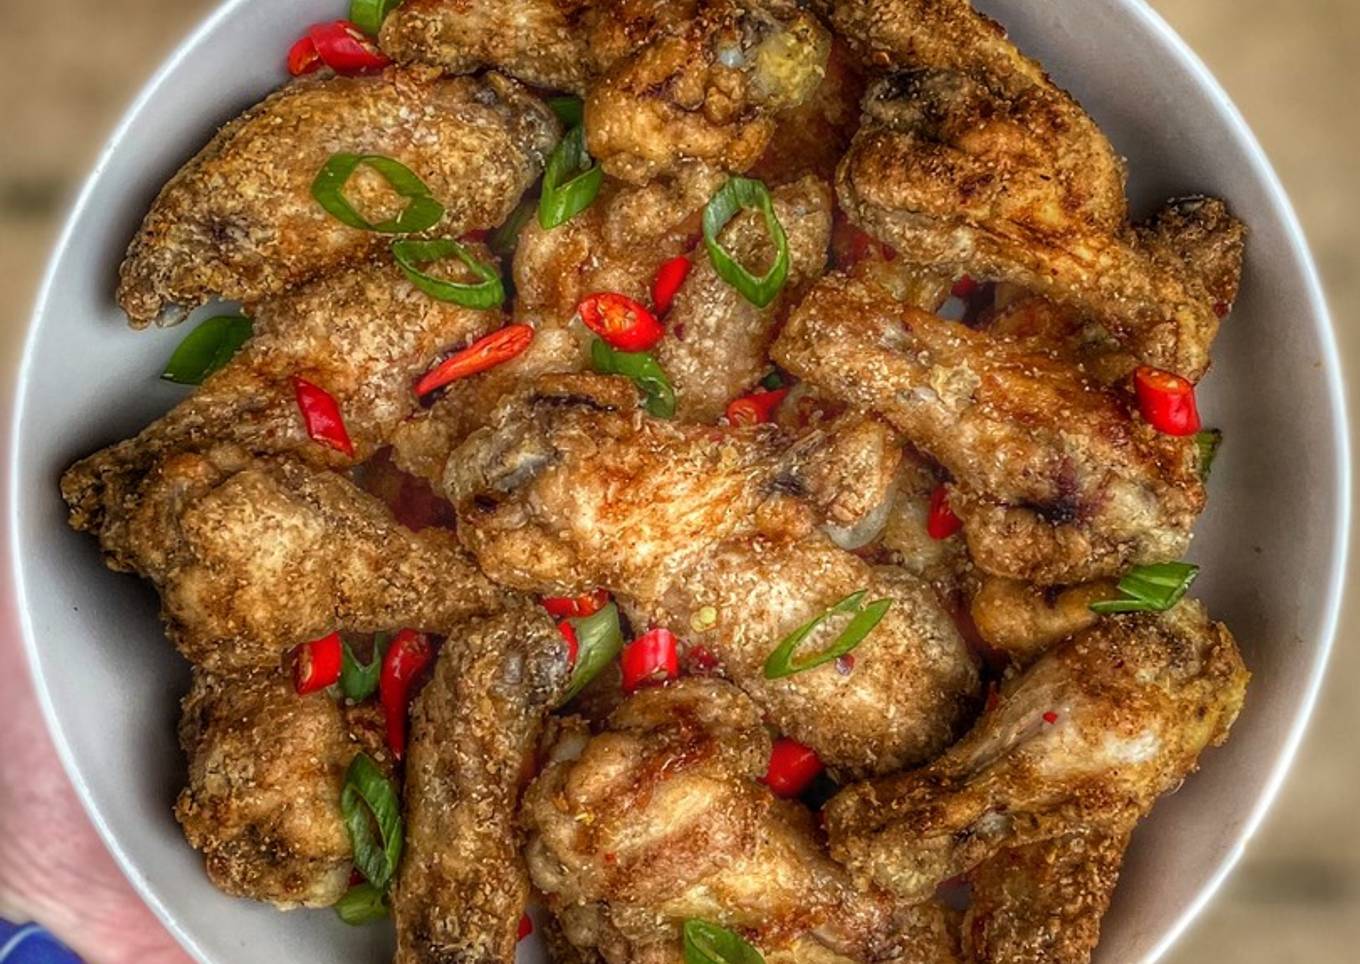 Salt & Pepper Chicken Wings